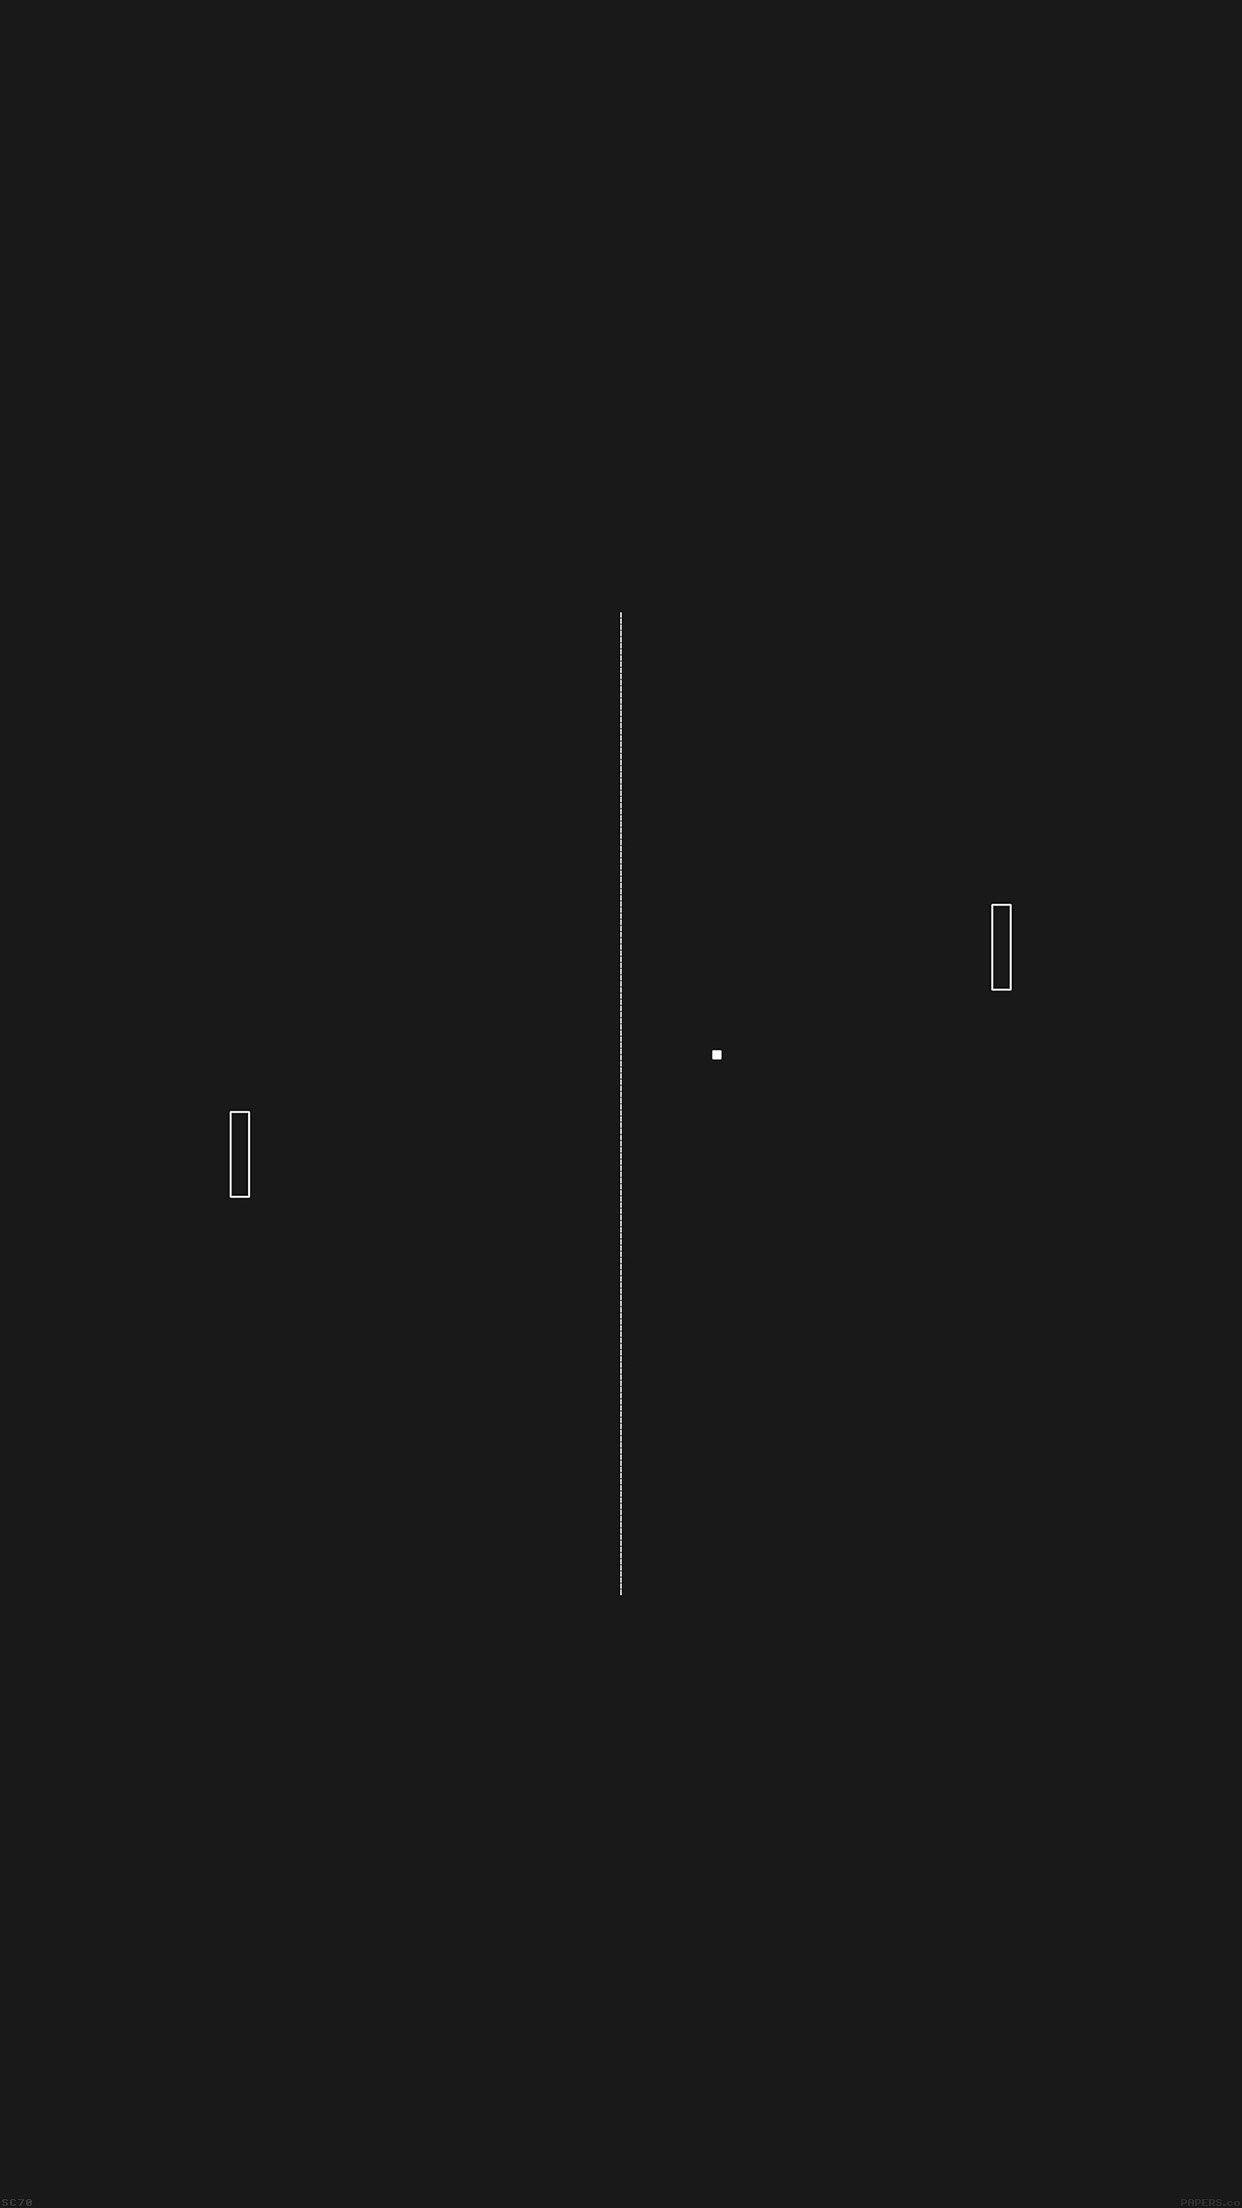 dark abstract minimalist phone wallpaper